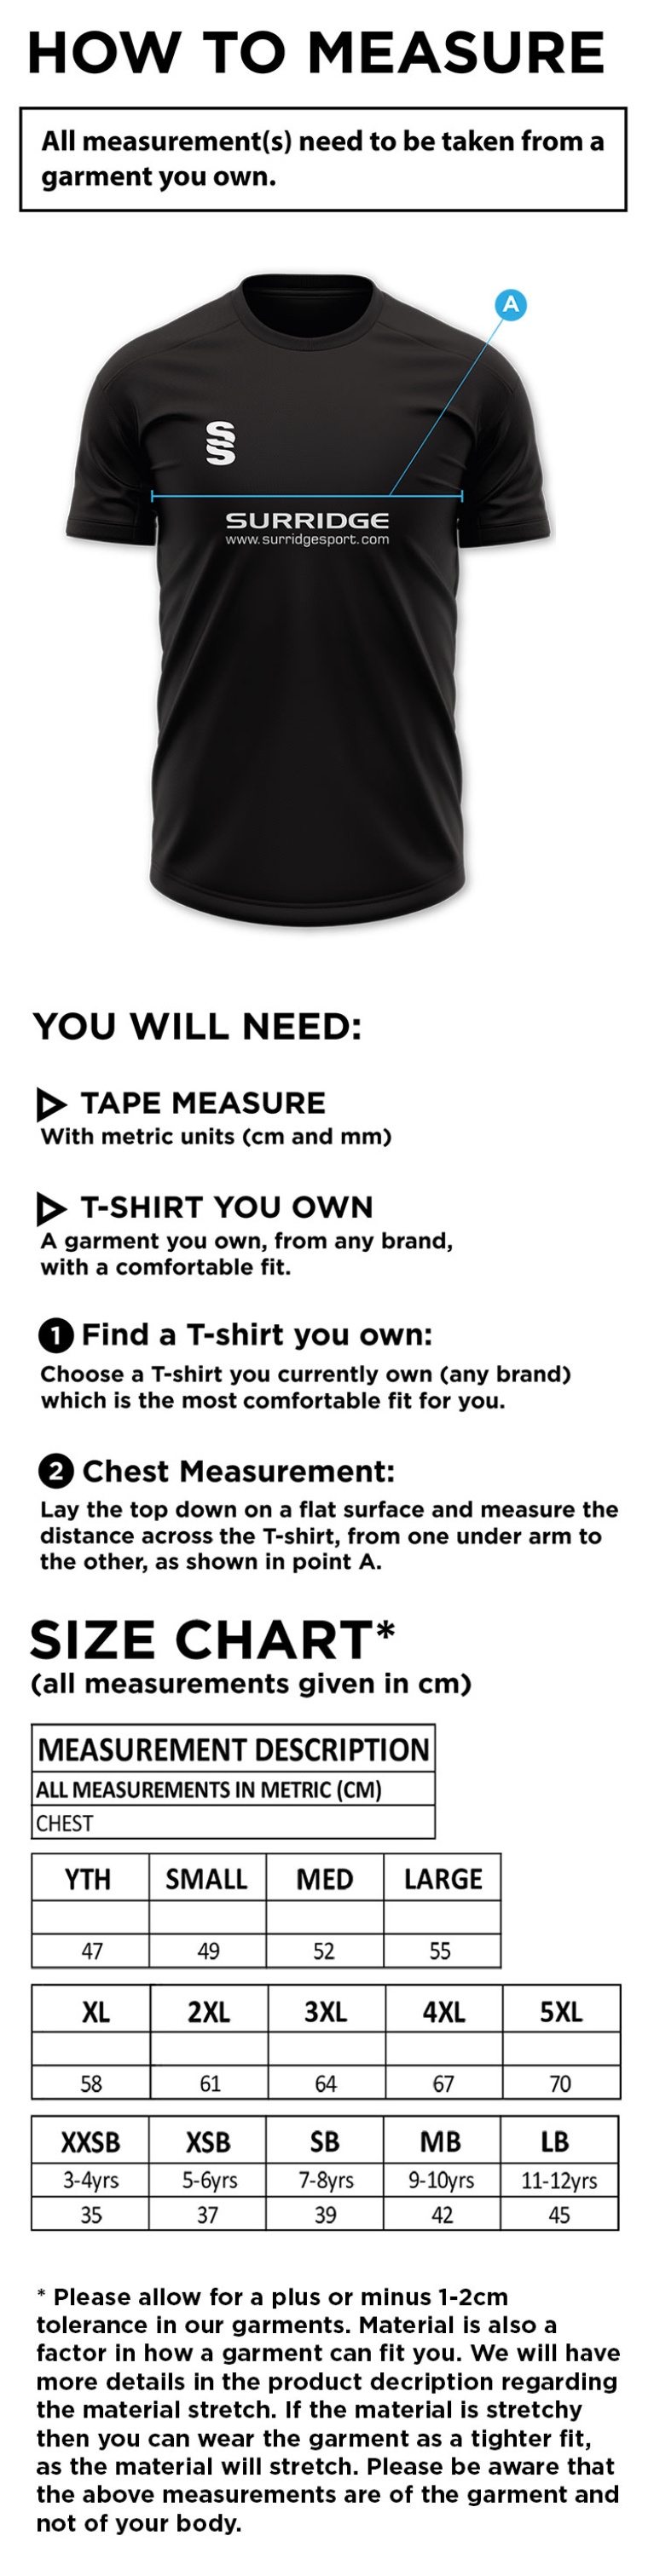 Women's Dual Gym T-shirt : Navy Melange - Size Guide